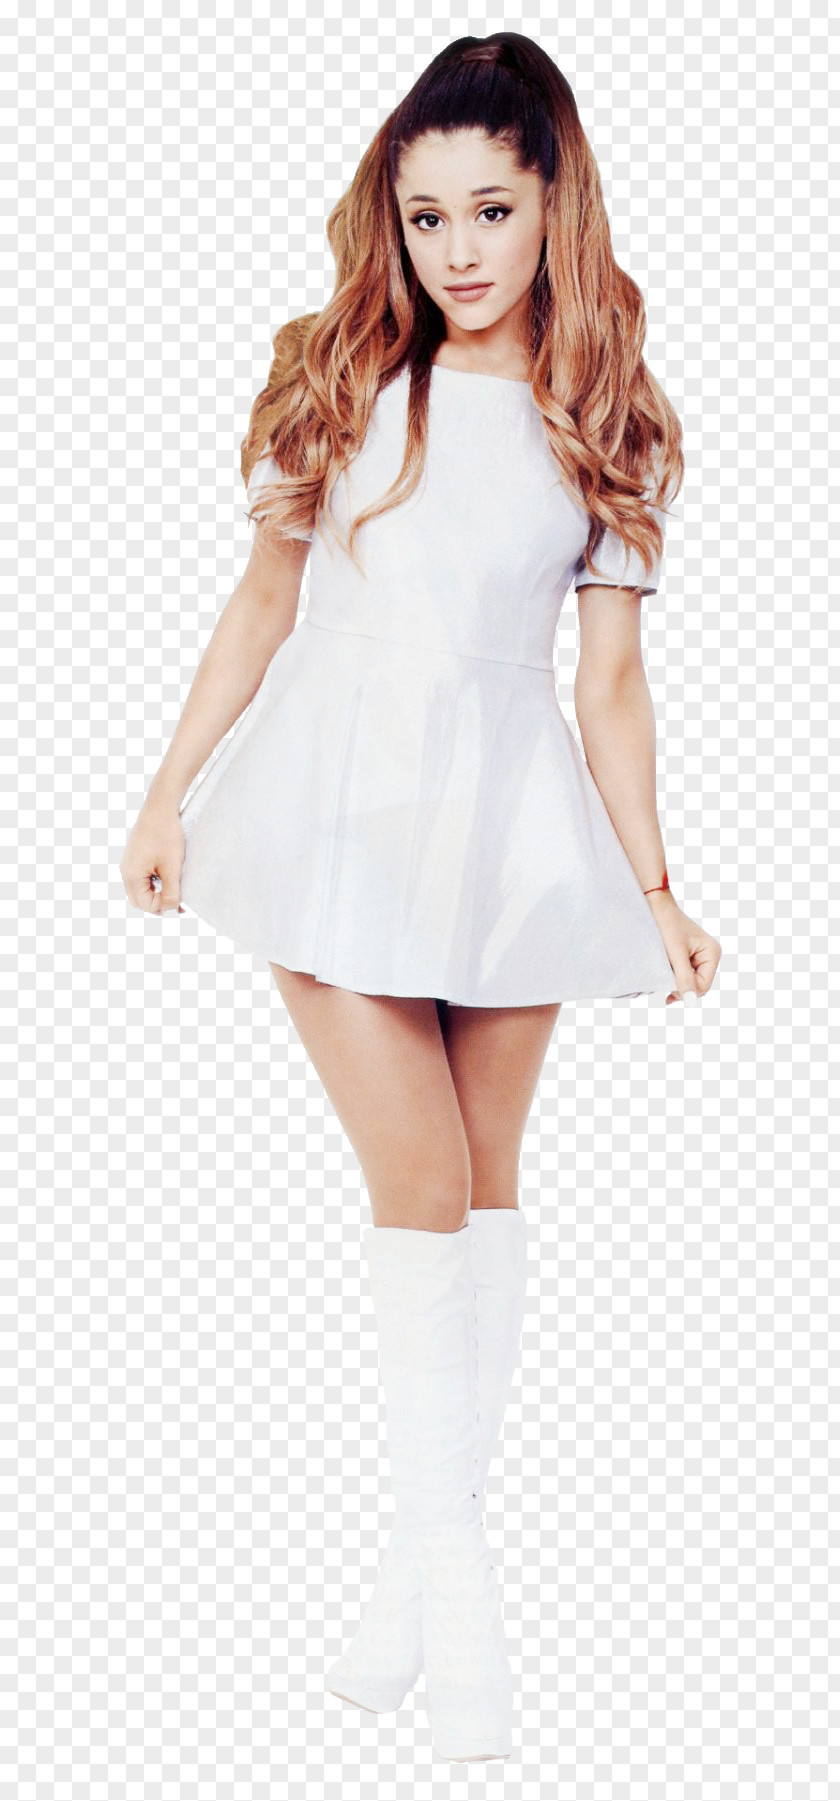 Ariana Grande Chanel #2 Clip Art PNG